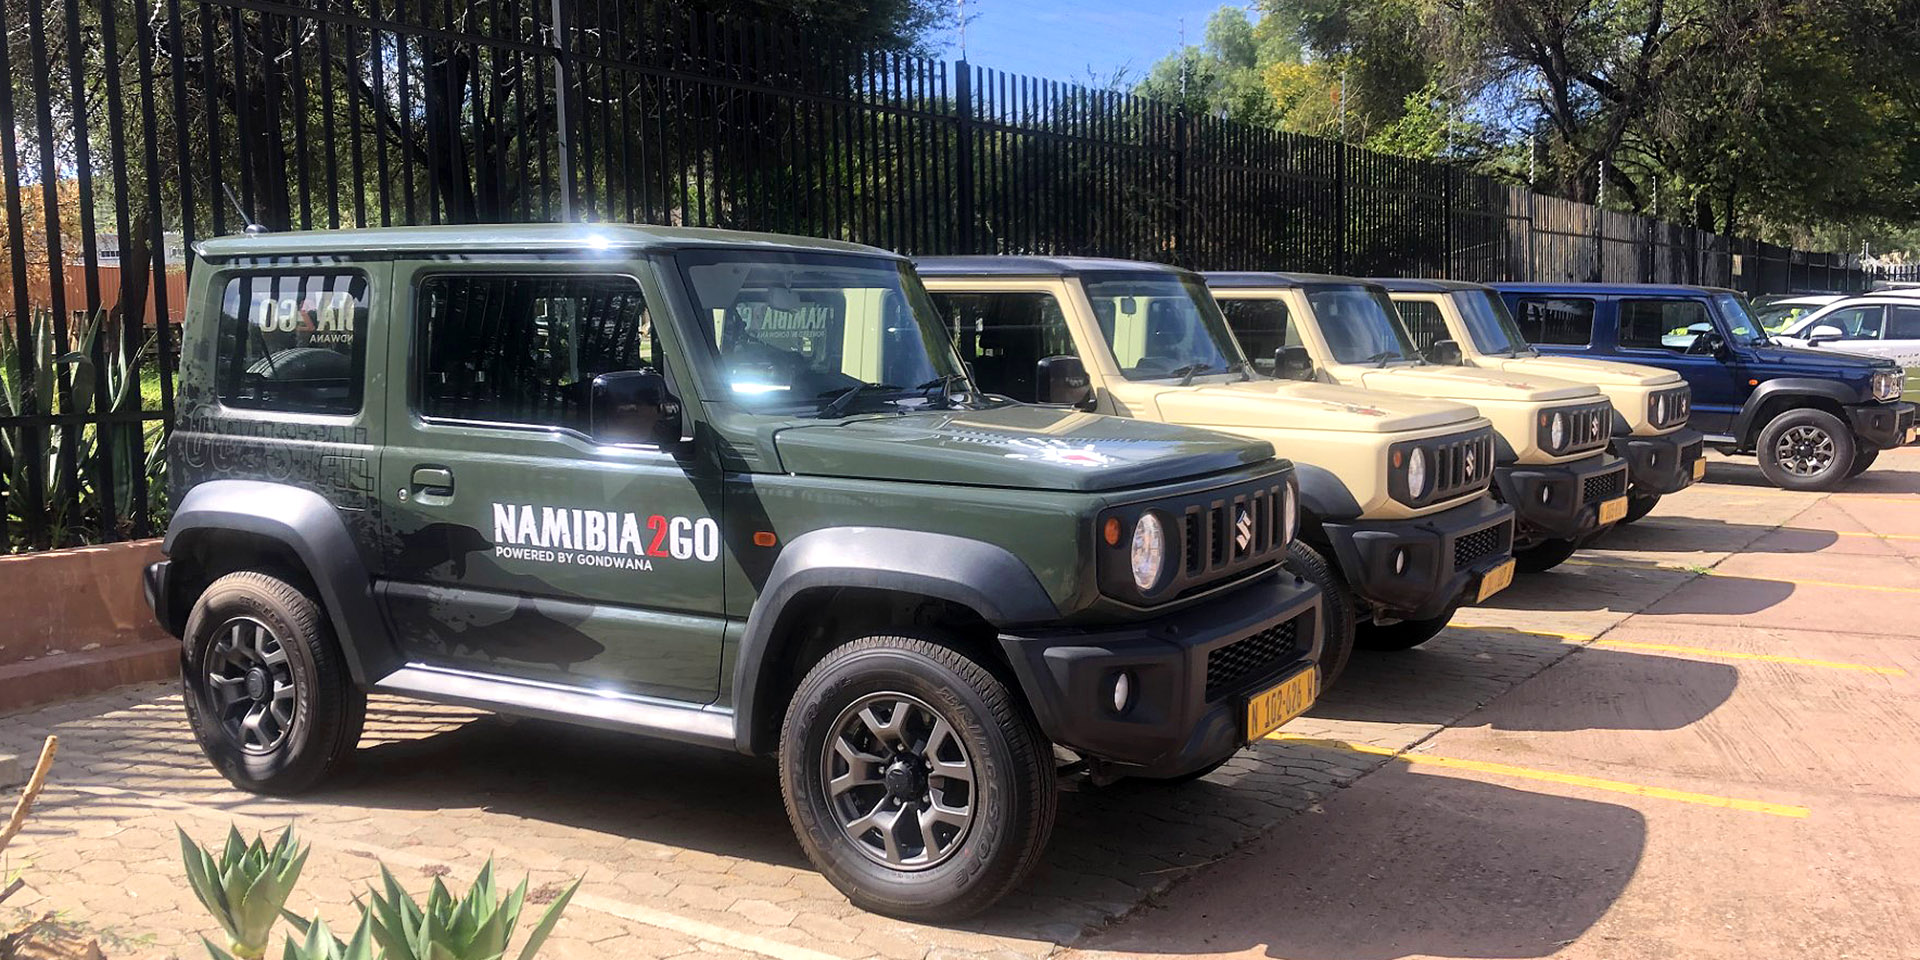 Namibia2Go rental vehicle with coastal brand